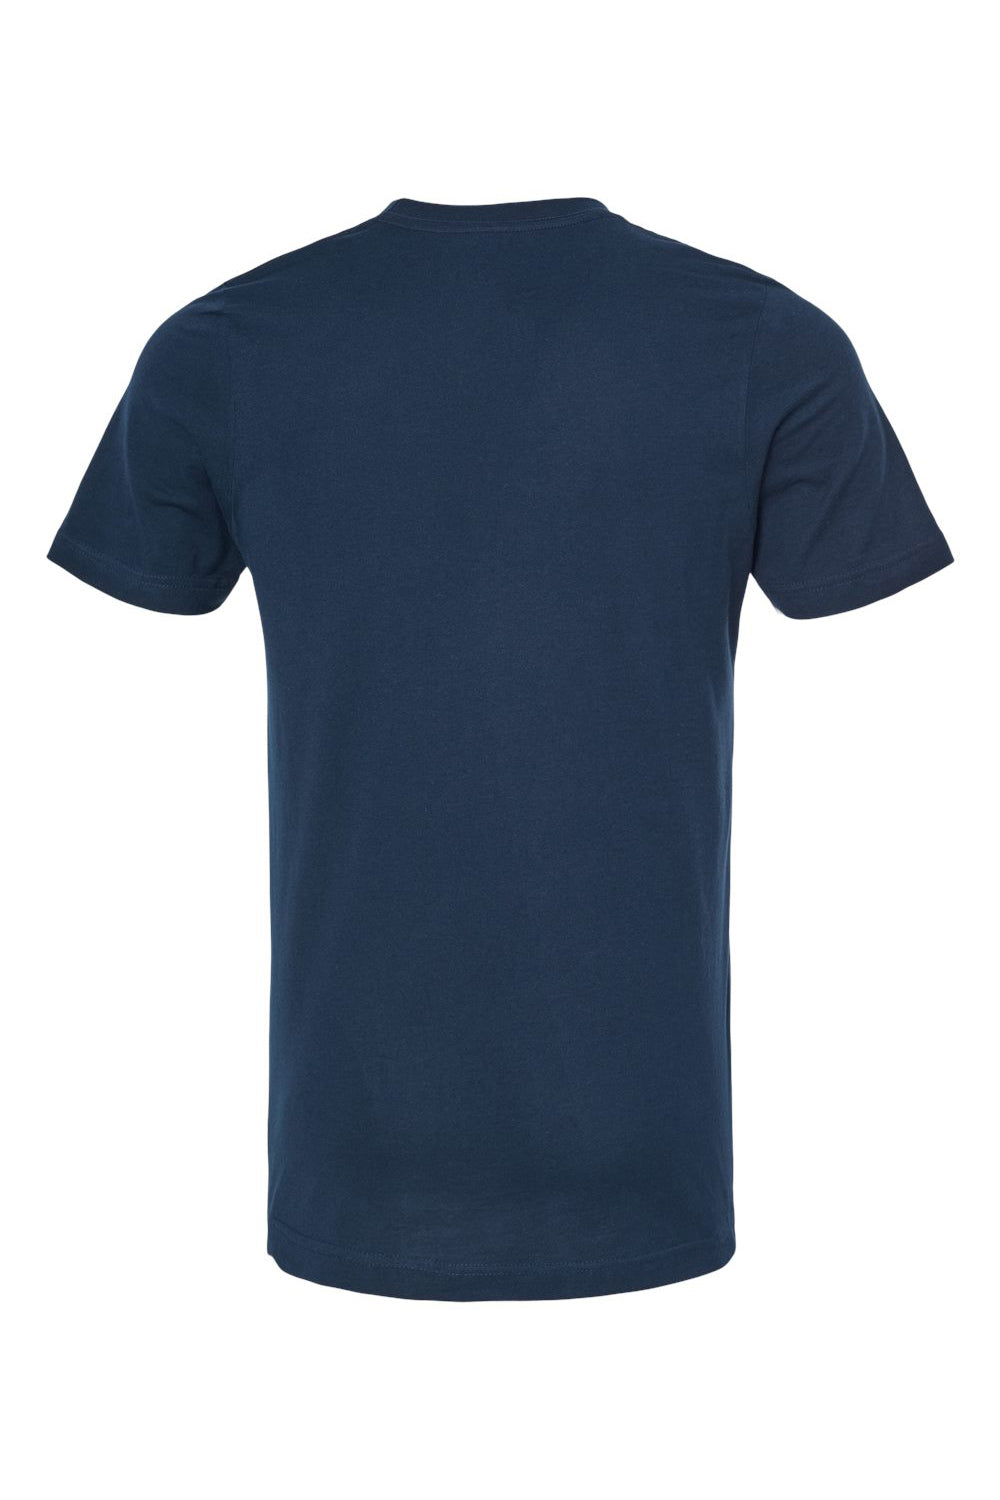 Tultex 502 Mens Premium Short Sleeve Crewneck T-Shirt Navy Blue Flat Back